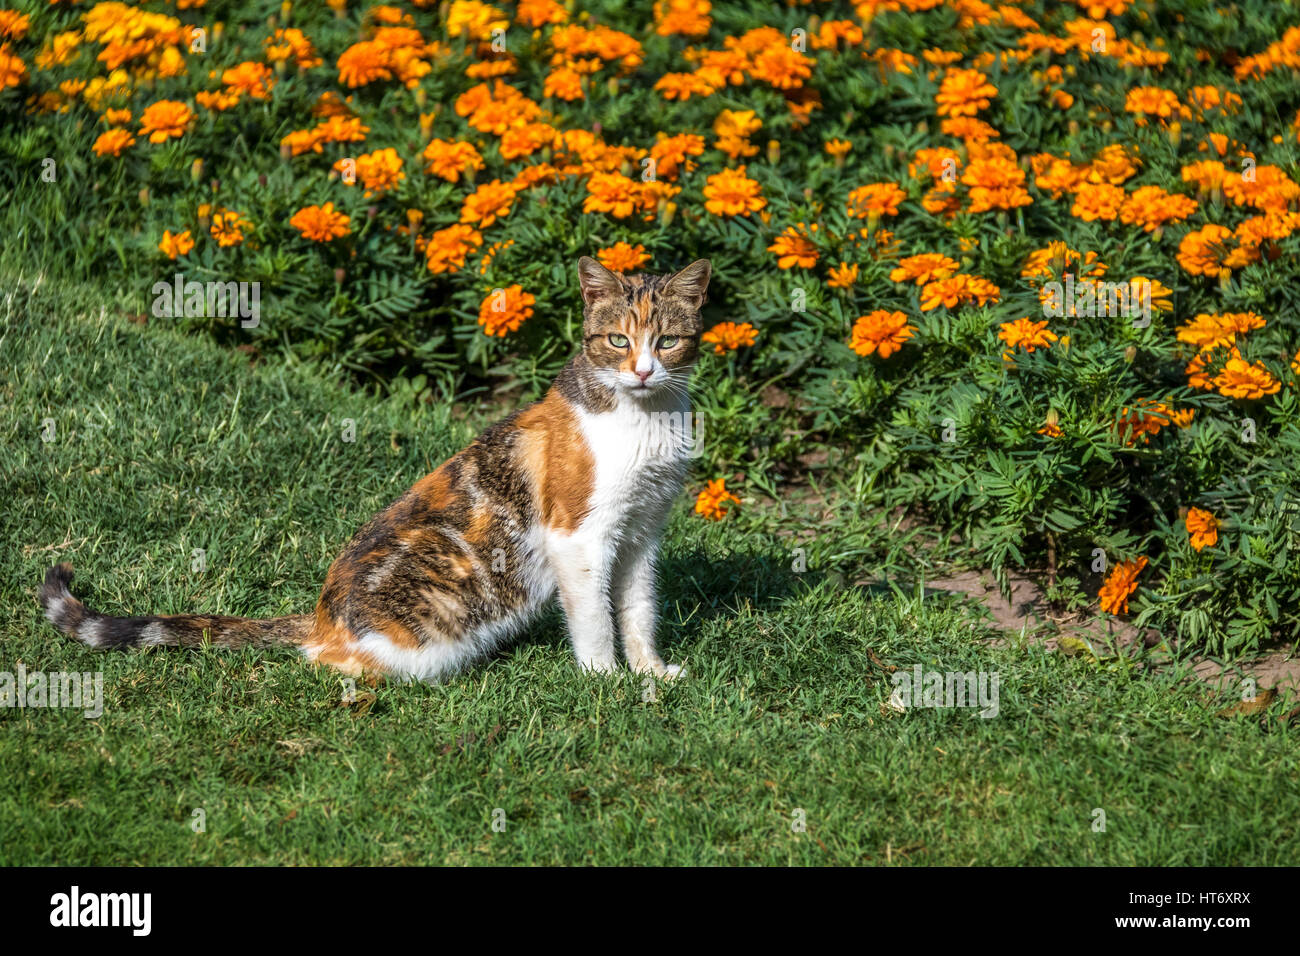 Cat in the garden with orange flowers Stock Photo